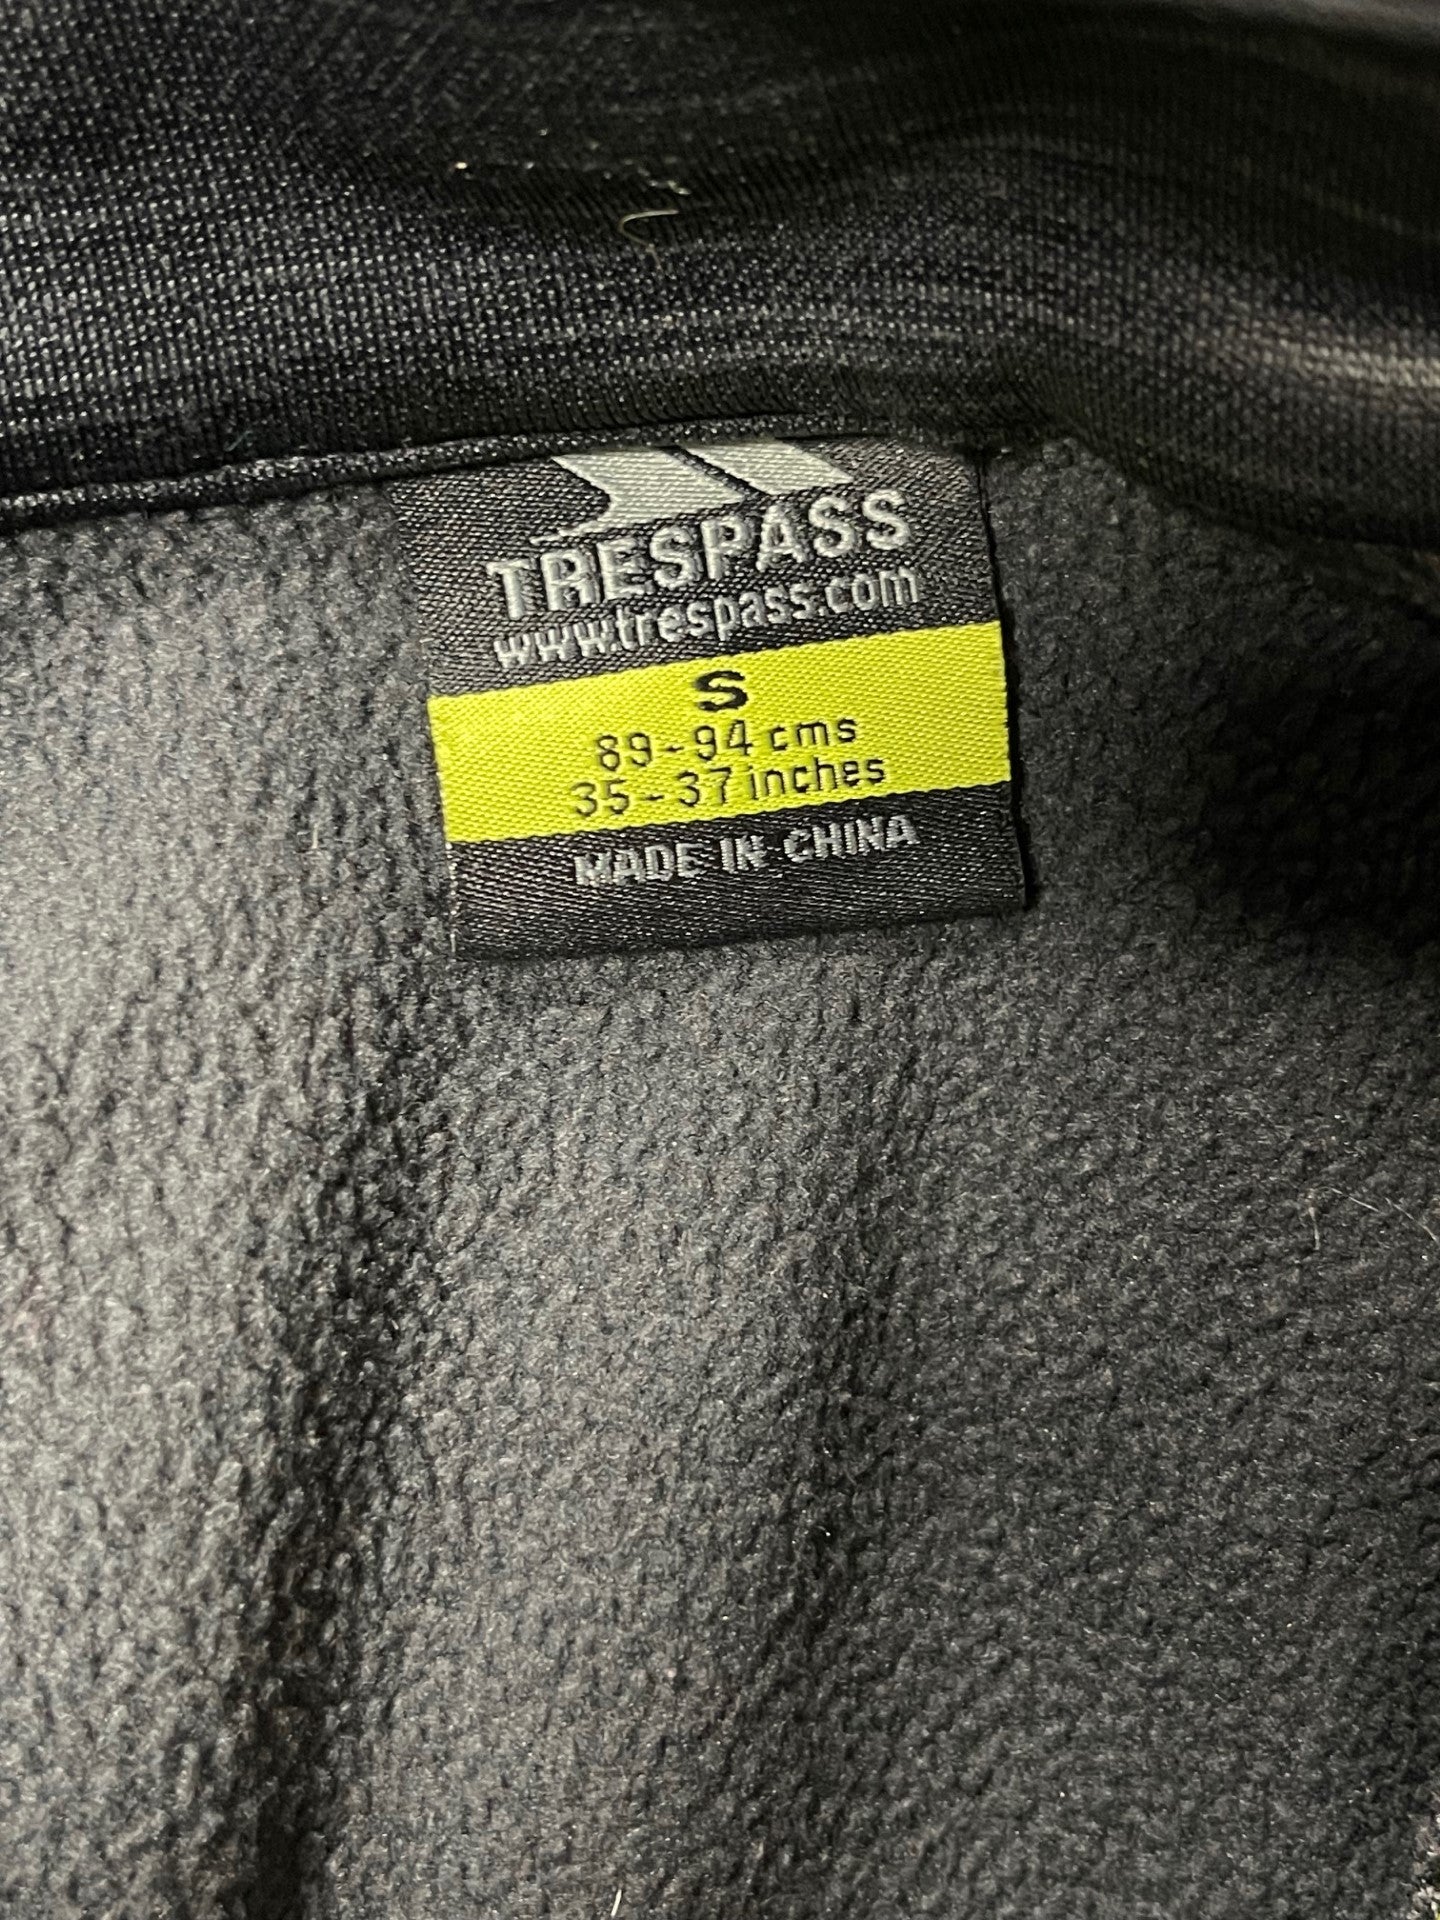 Trespass Grey Zip Jumper Size Small